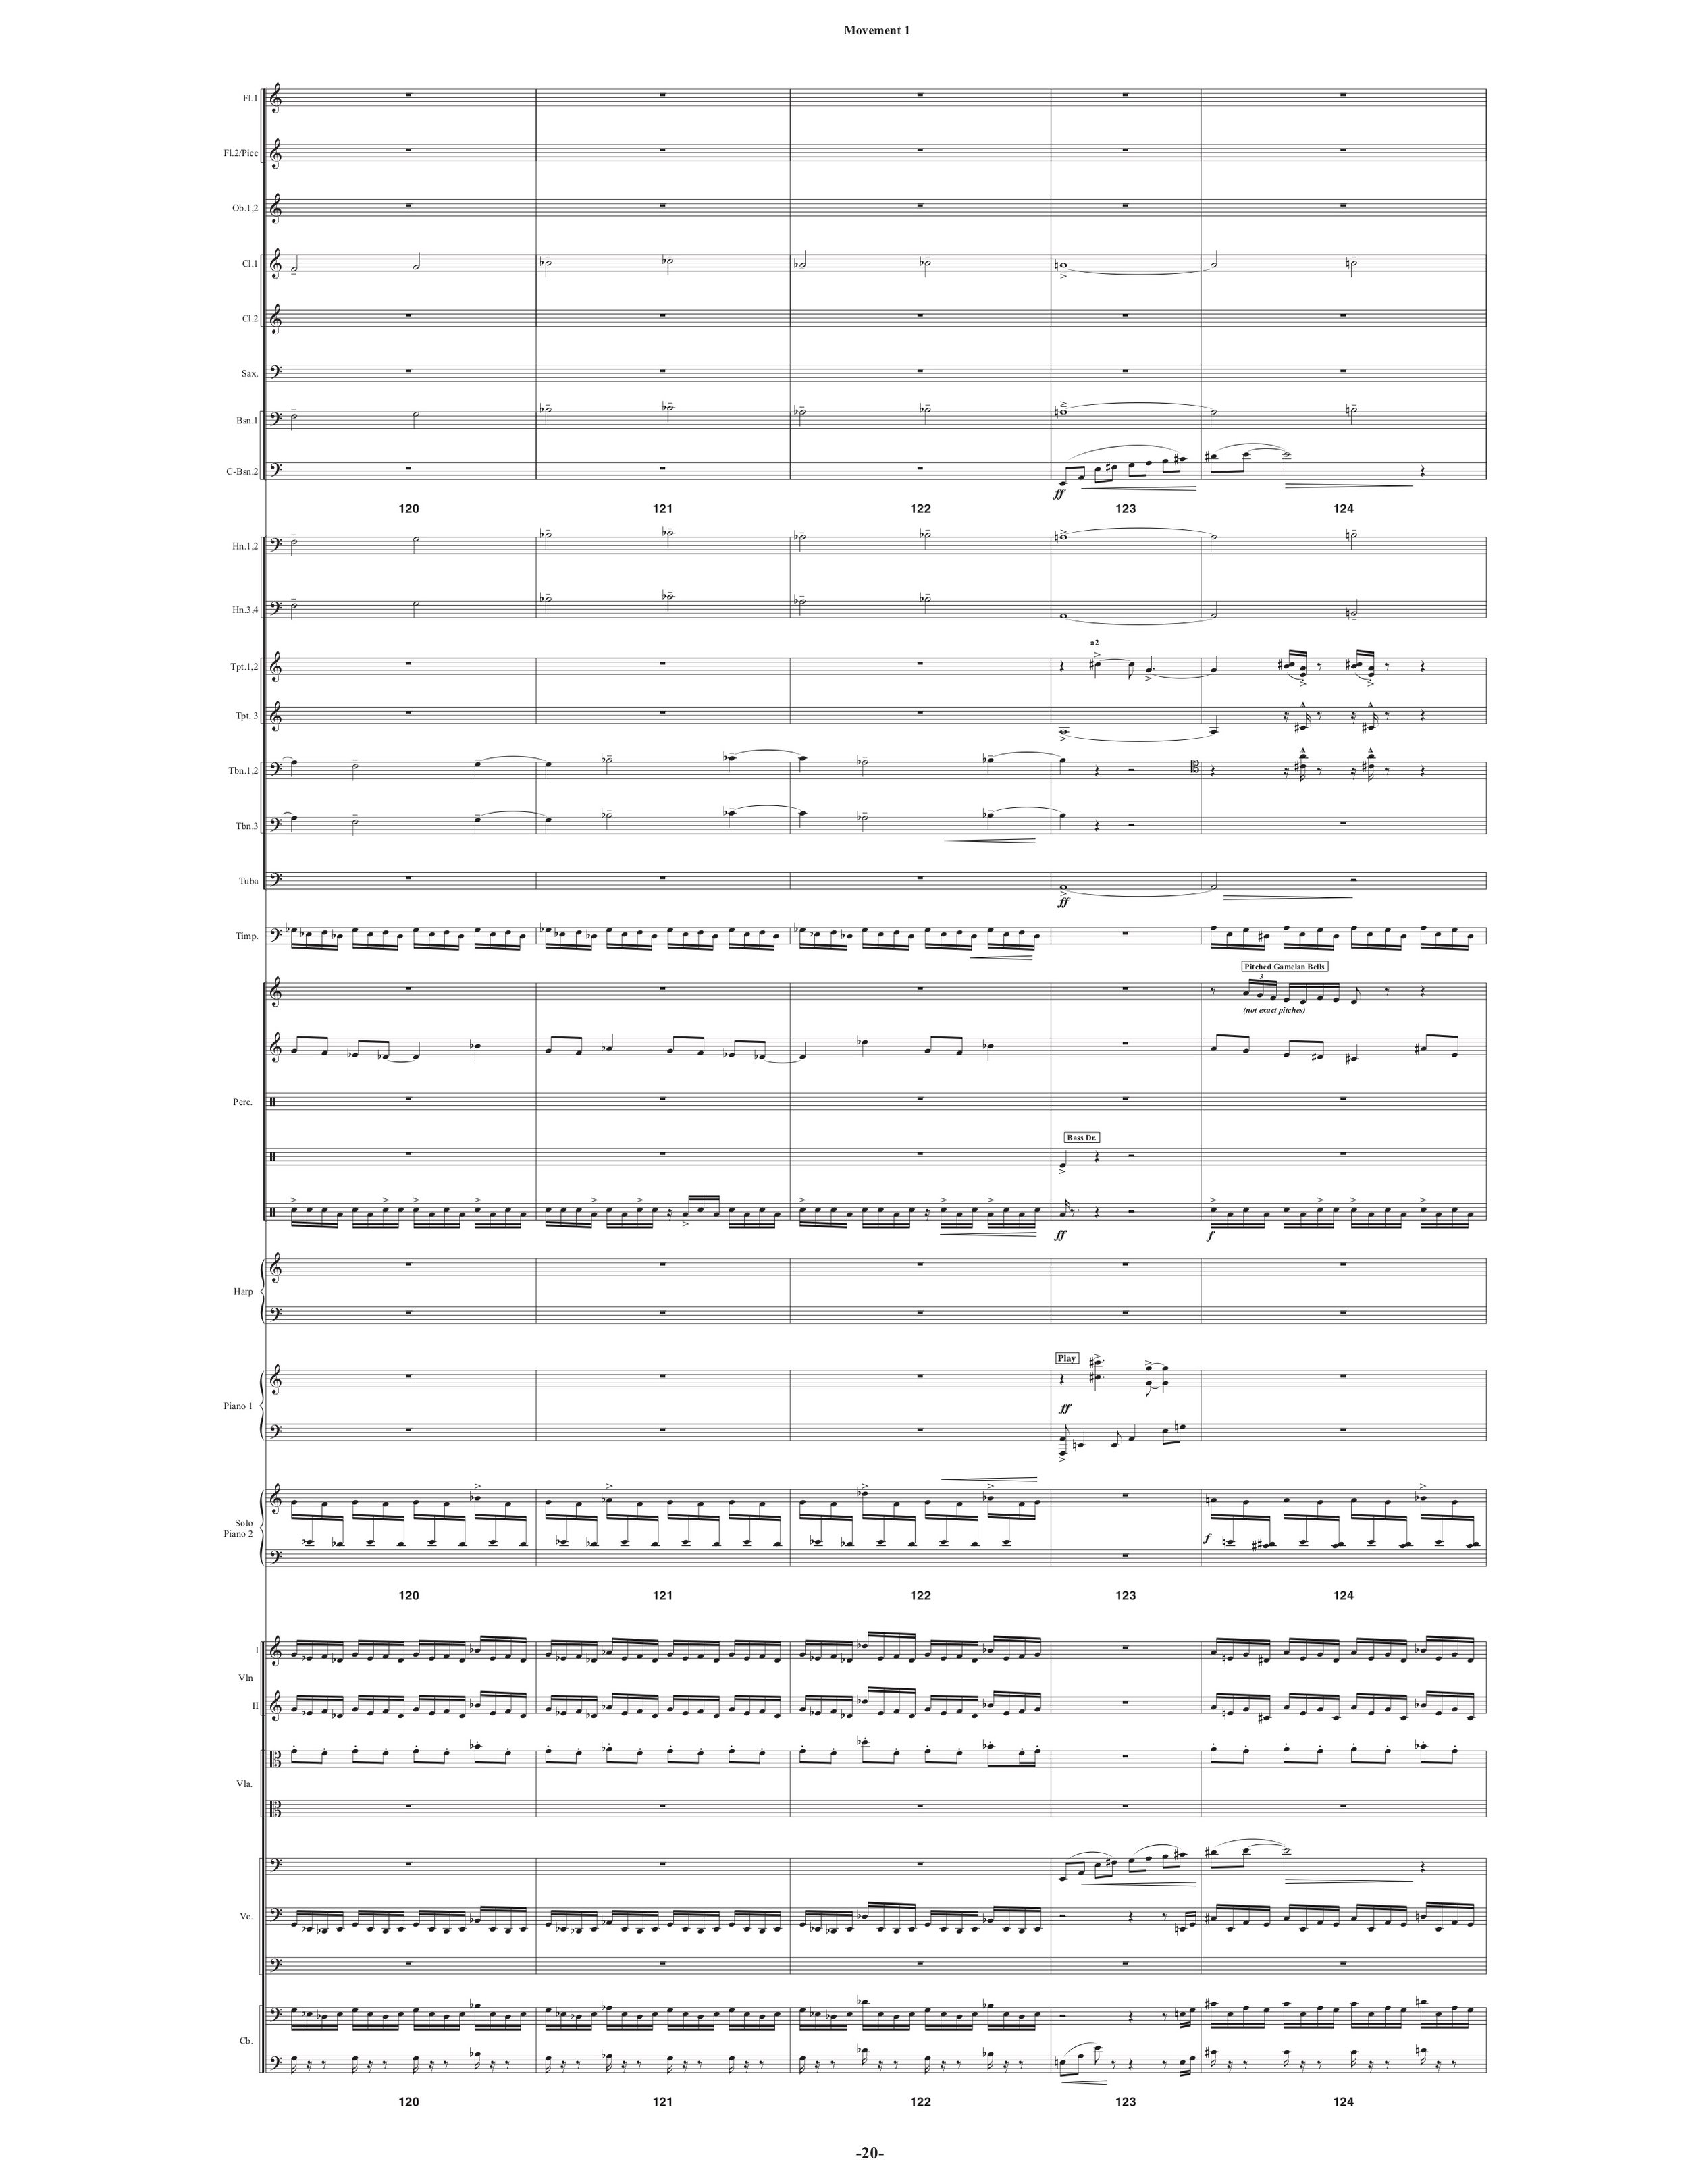 Symphony_Orch & 2 Pianos p25.jpg